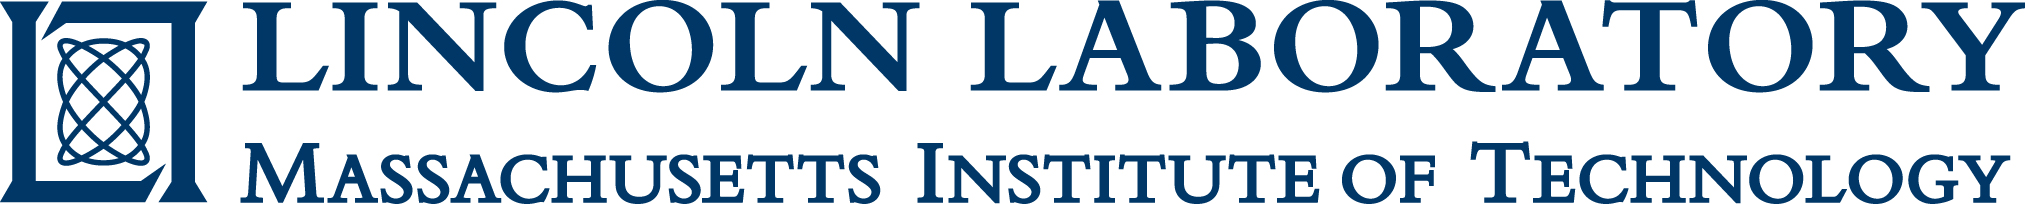 LL Logo blue.jpg